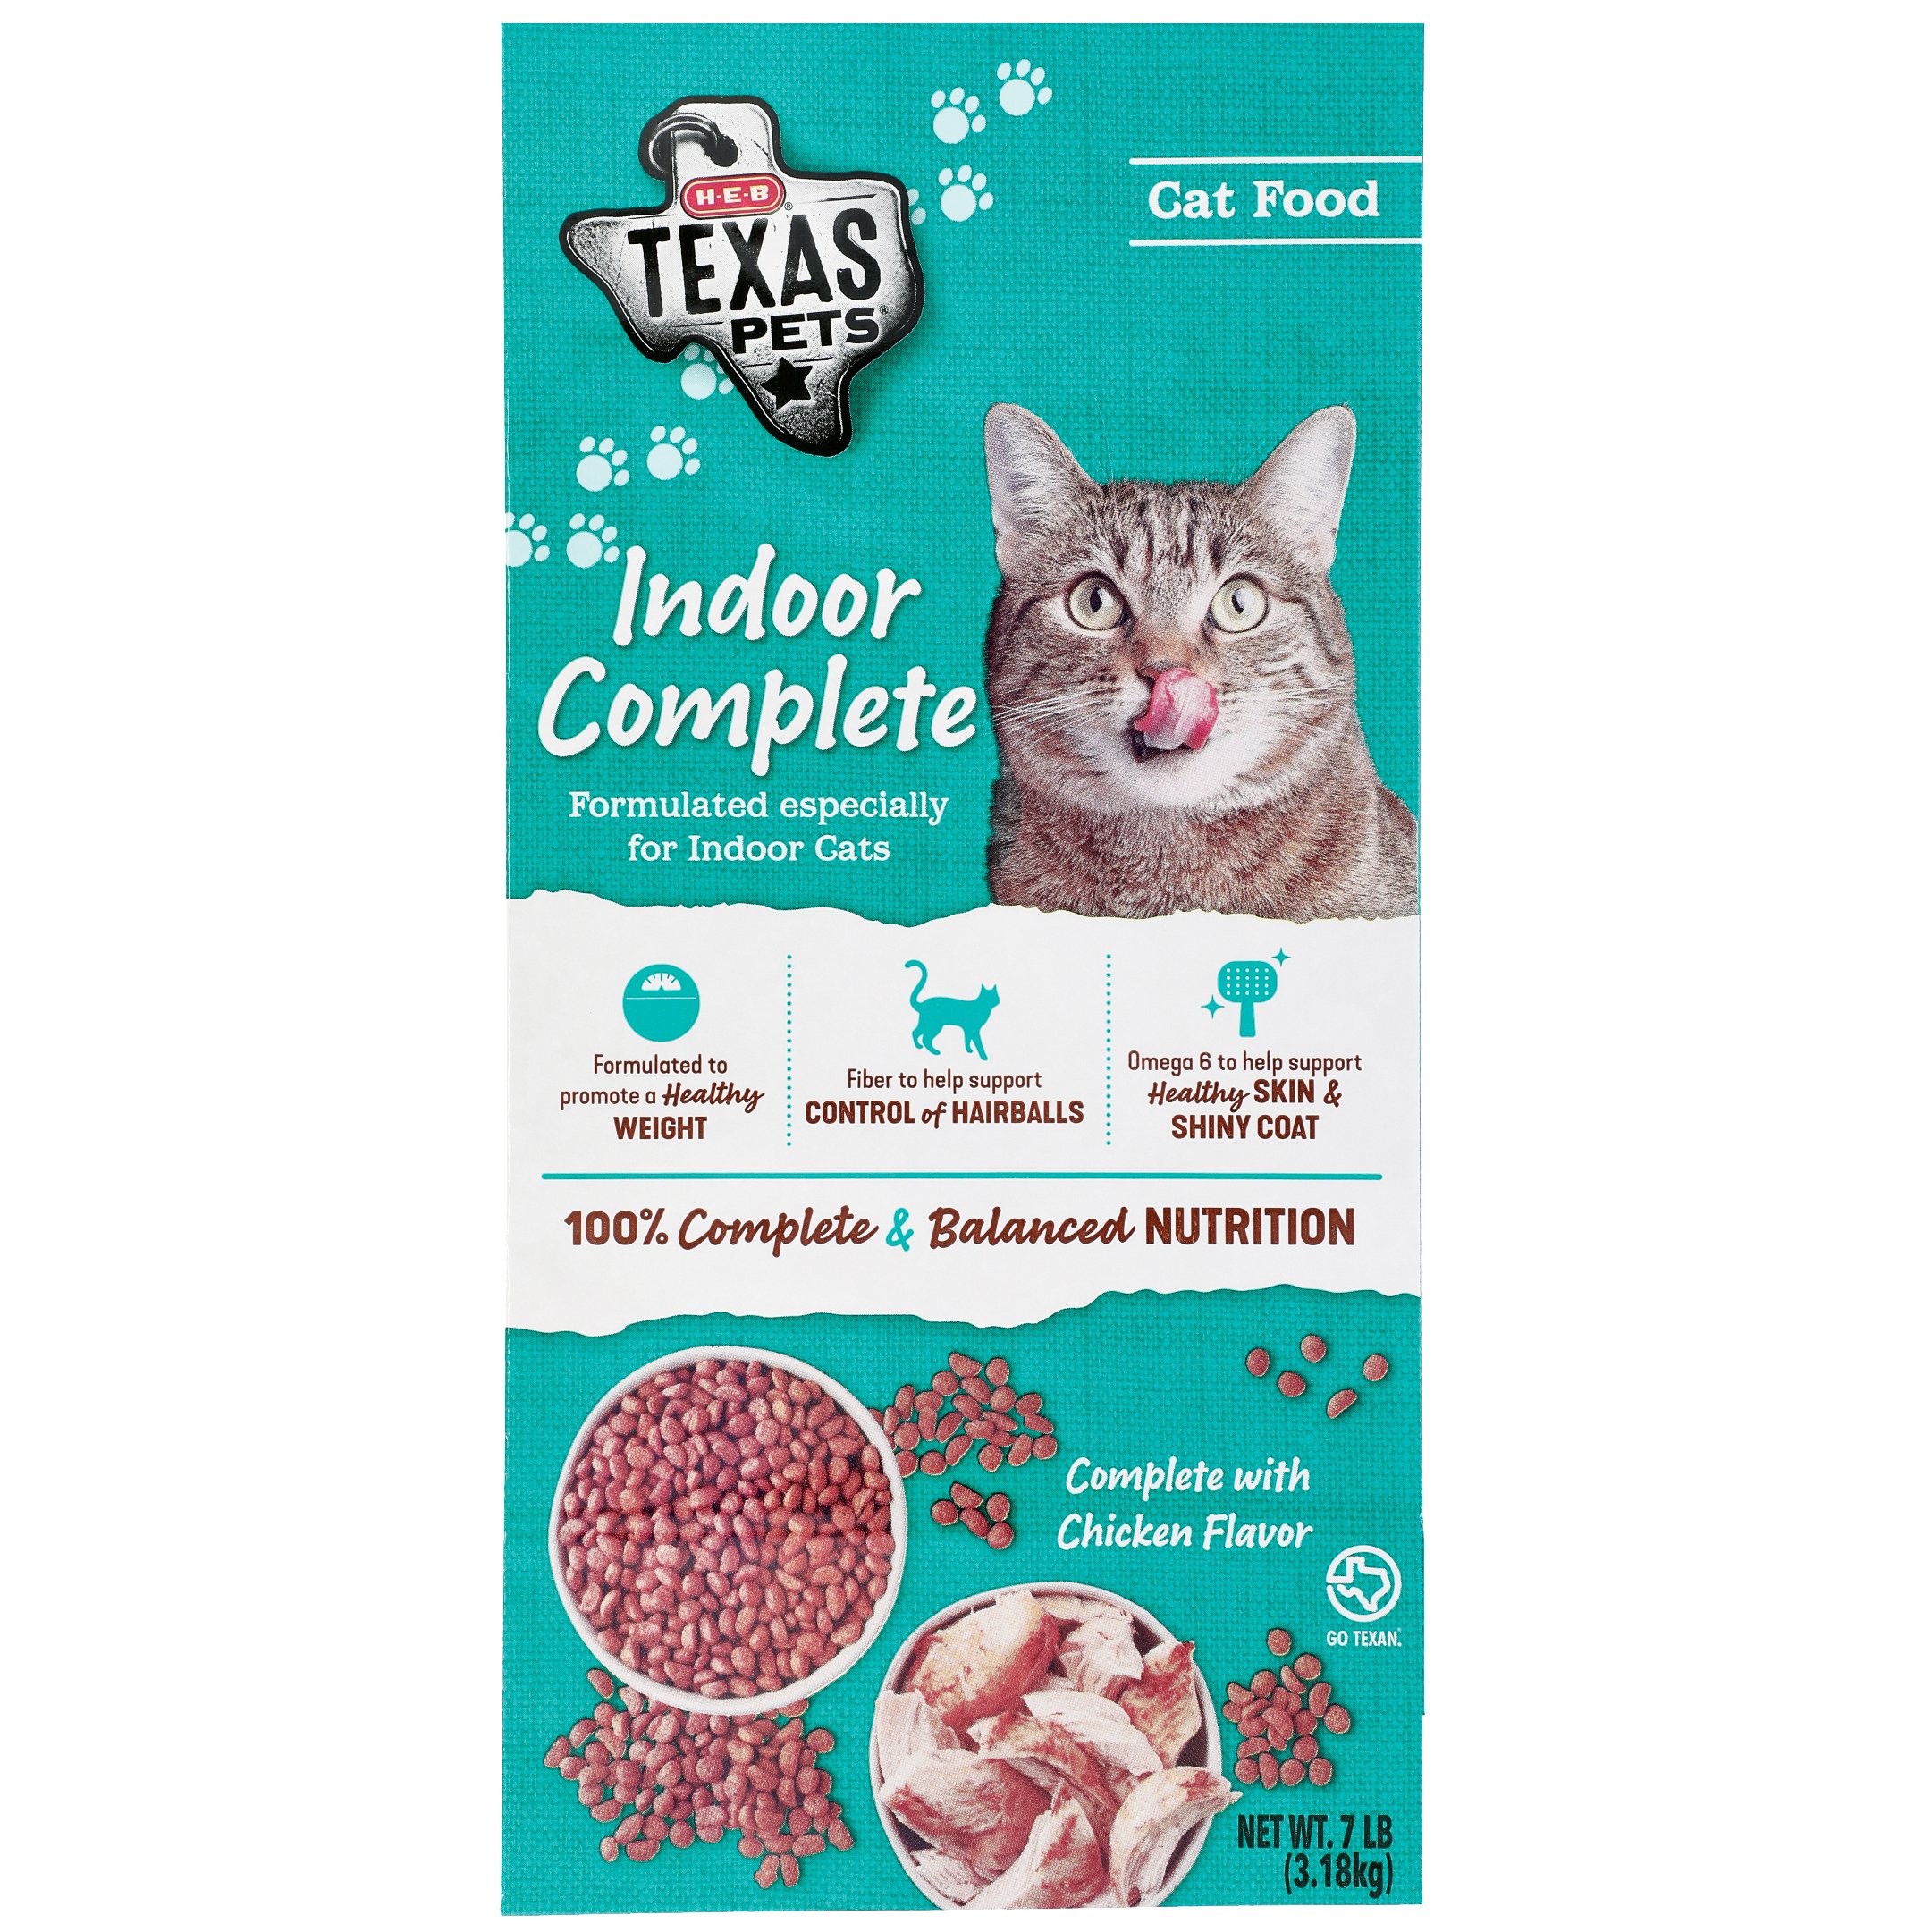 HEB Texas Pets Indoor Complete Formula Dry Cat Food Shop Food at HEB